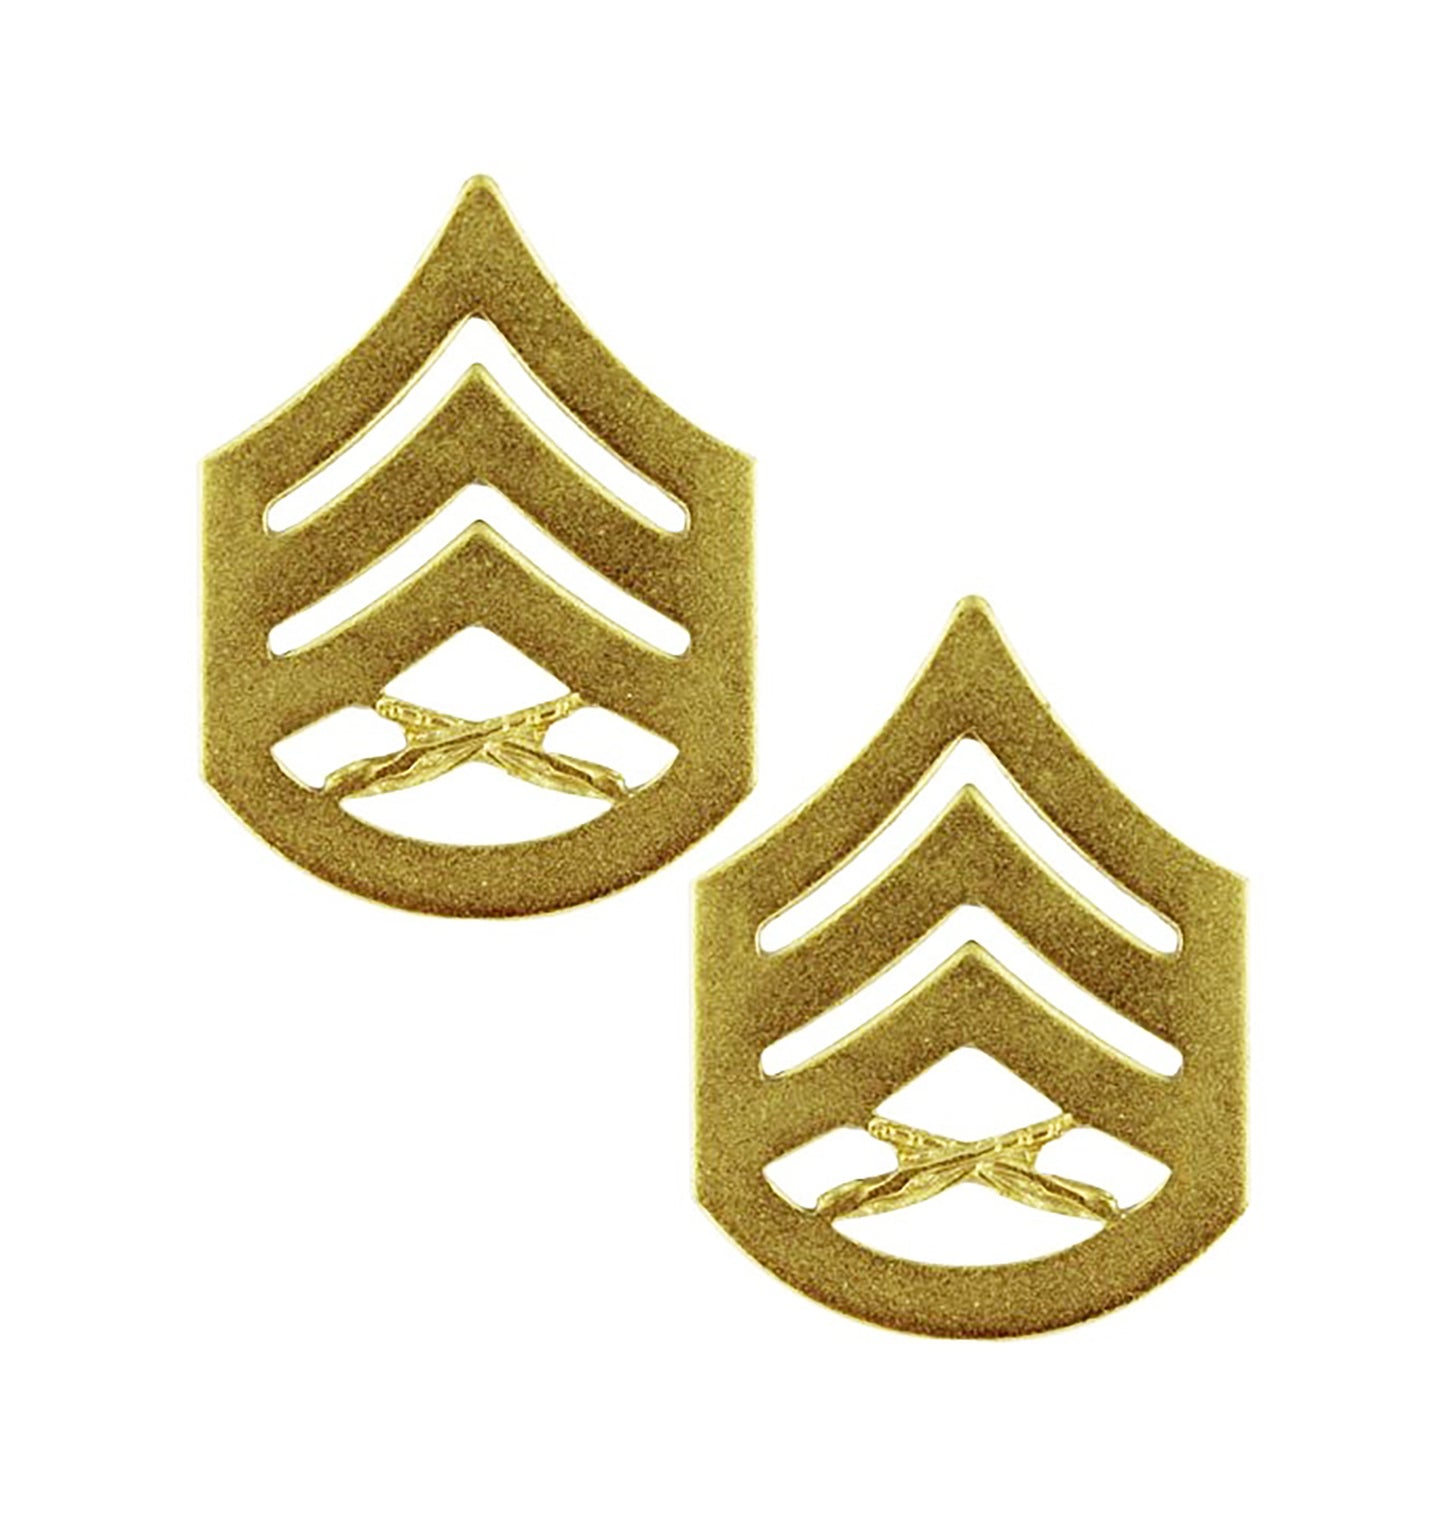 U.S. Marine Corps Staff Sergeant Satin Gold Rank (pair)